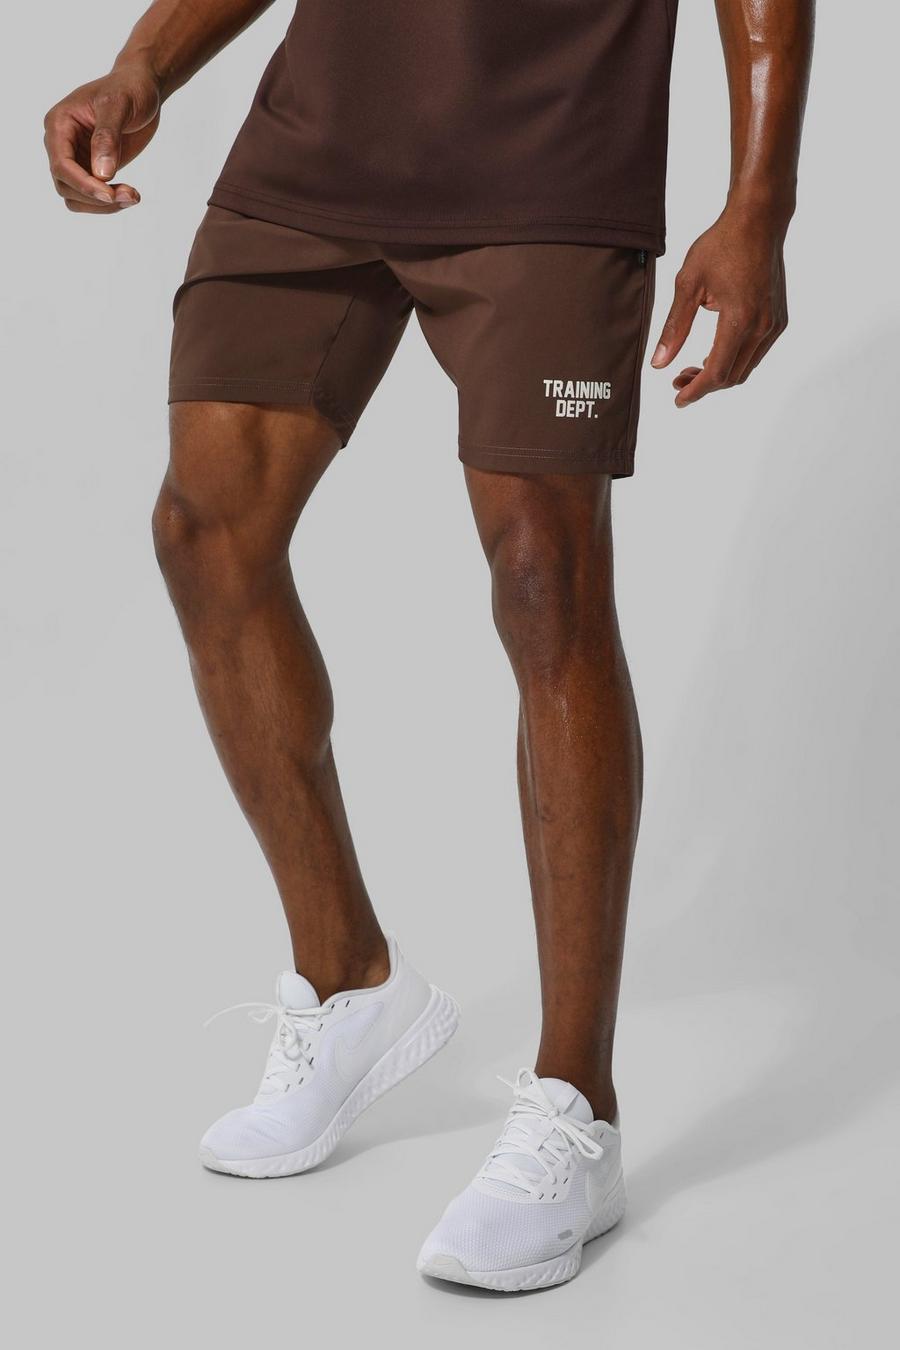 Chocolate brown Man Active Performance Training Dept Shorts